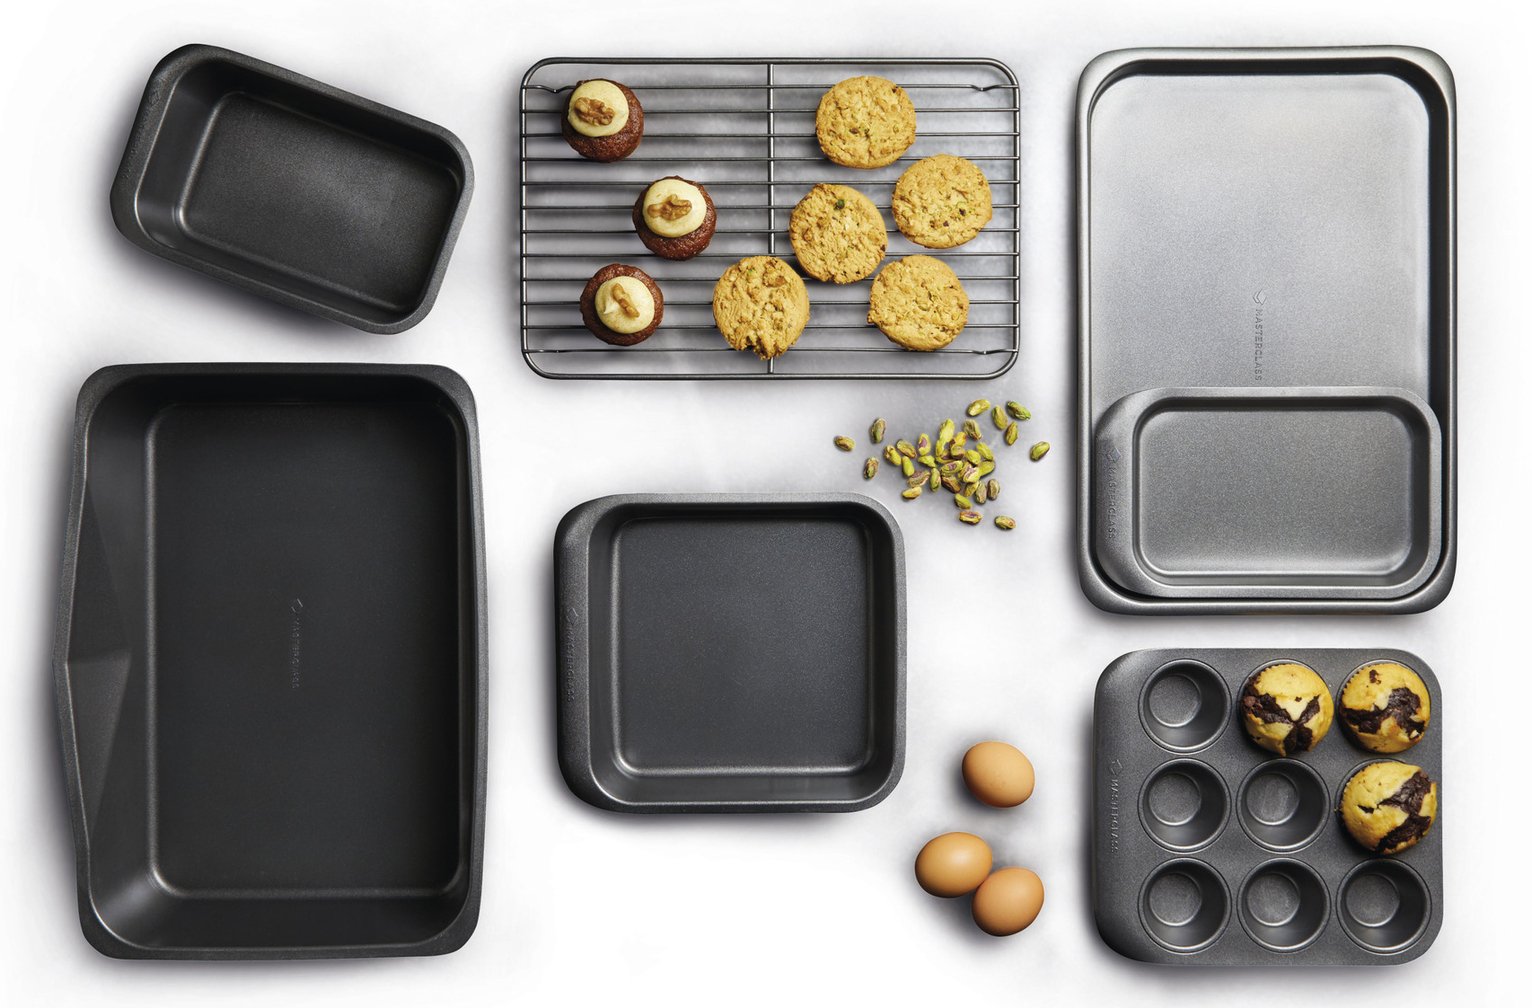 Masterclass 7 Piece Carbon Steel Bakeware Set Review